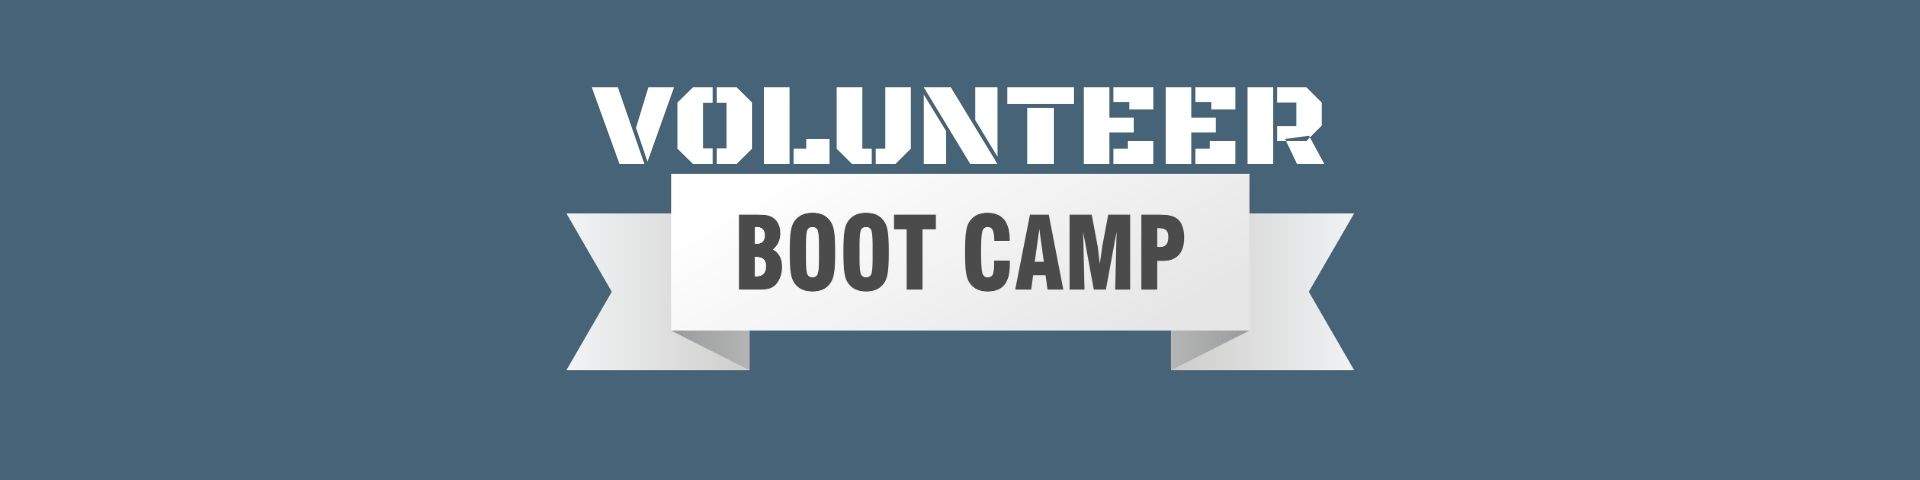 Volunteer Bootcamp Banner 1